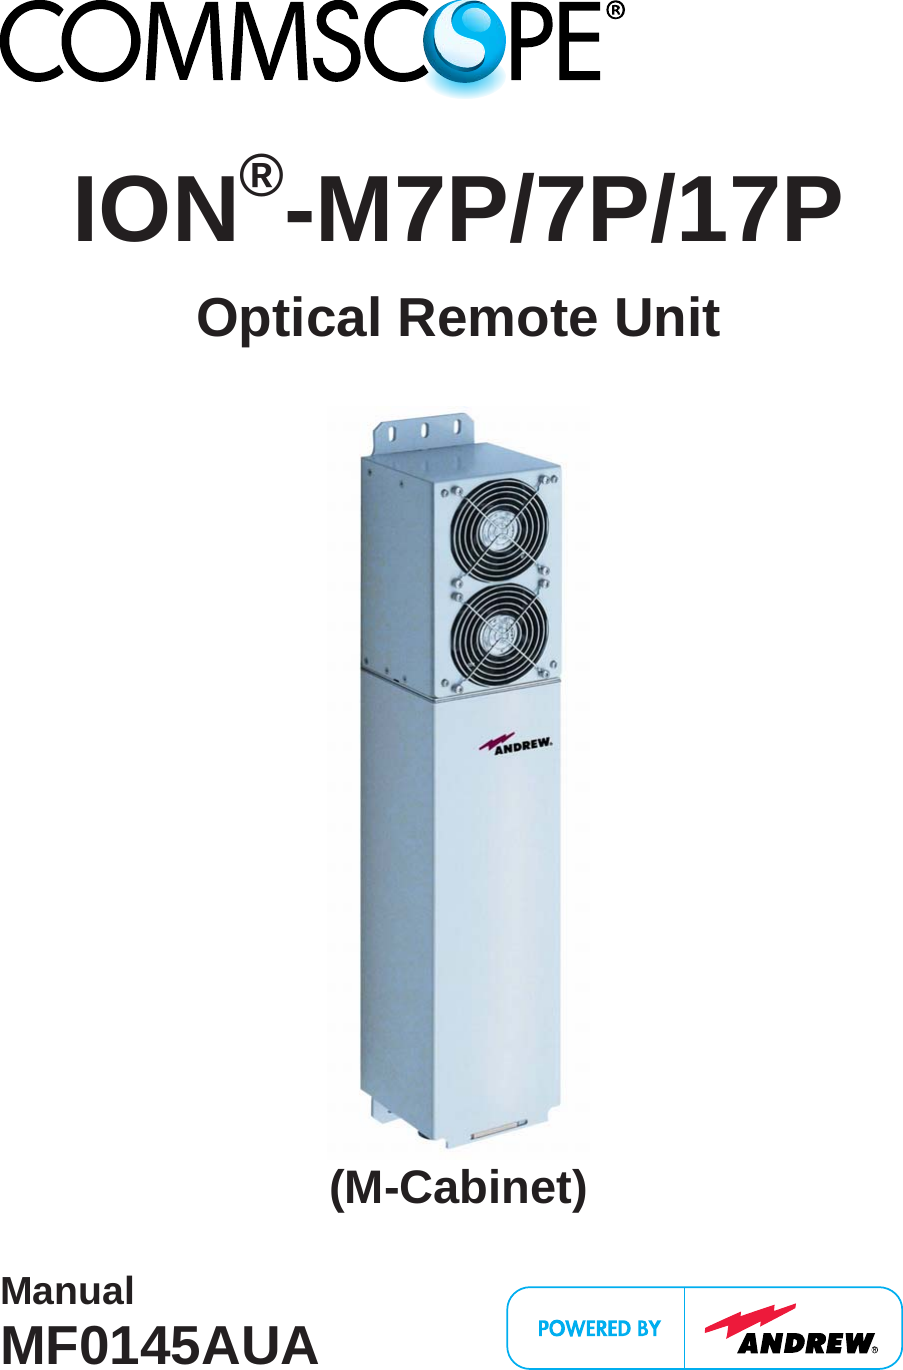   ION®-M7P/7P/17P Optical Remote Unit   (M-Cabinet)   Manual  MF0145AUA  